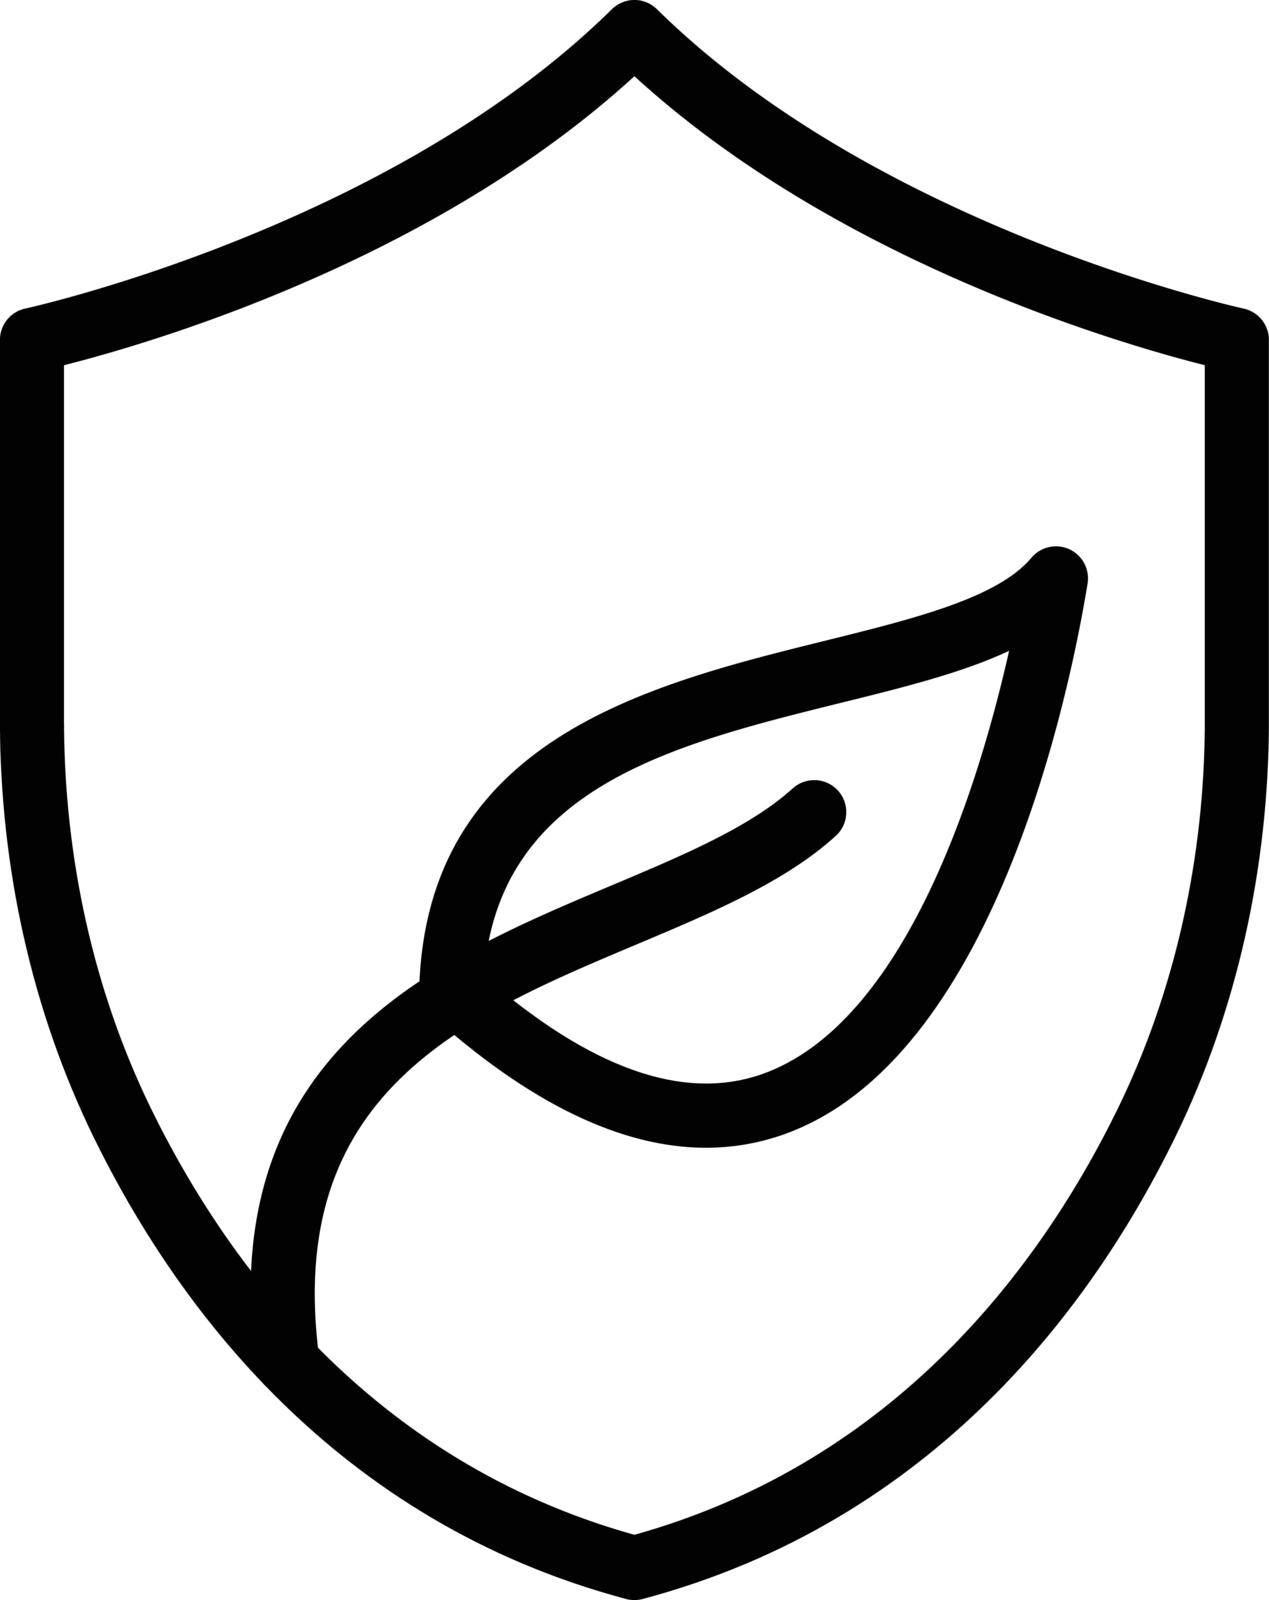 Eco shield vector thin line icon